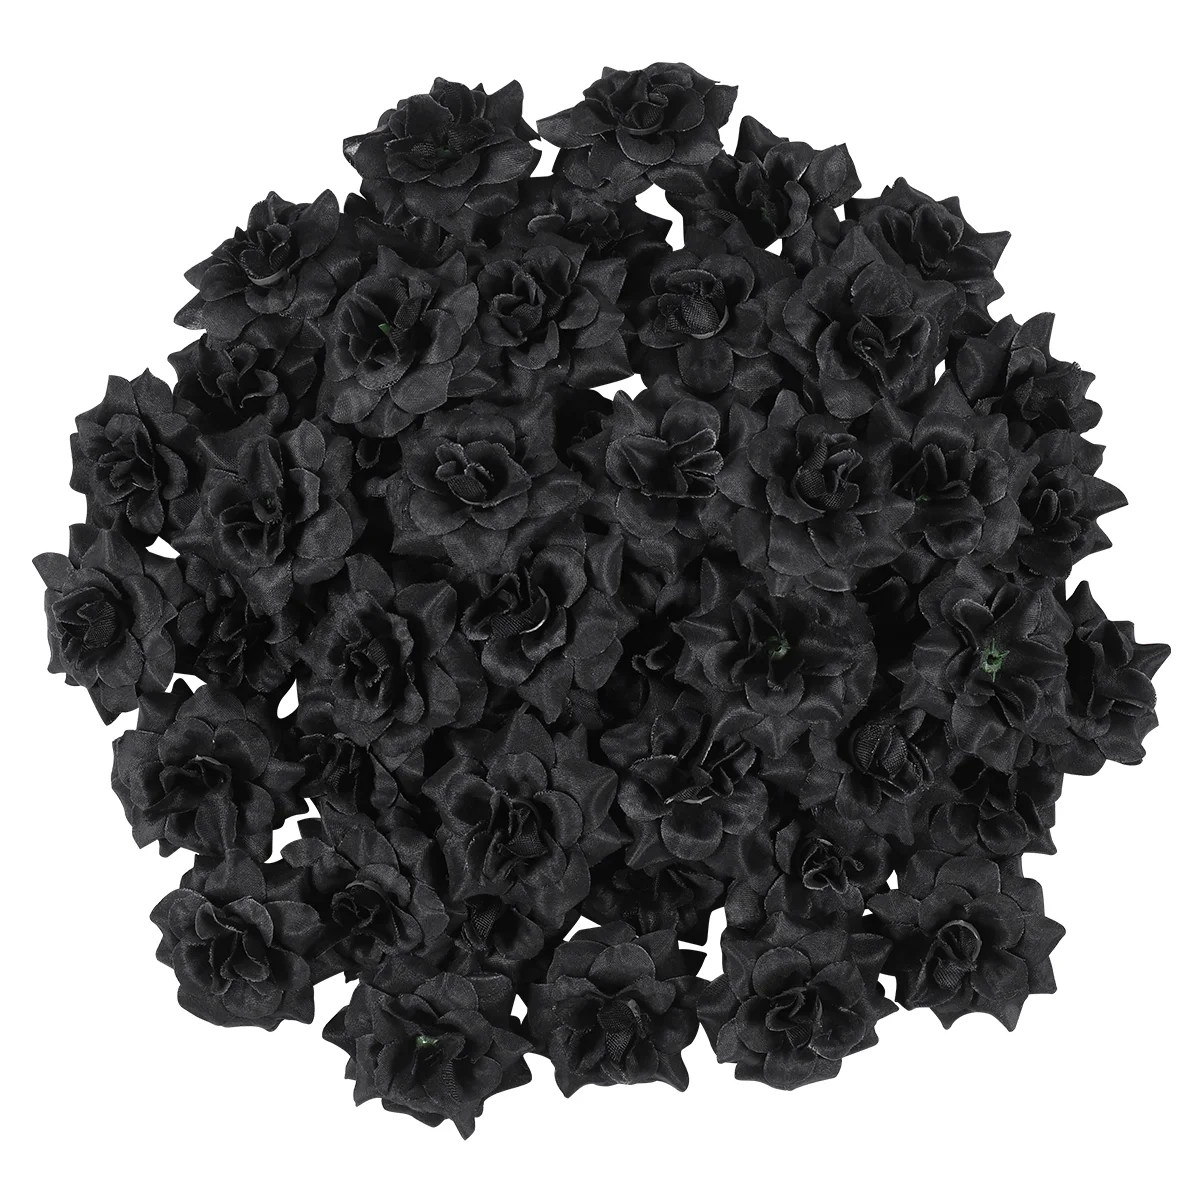 

LUOEM 50pcs Simulation Silk Rose Flower Heads for Hat Clothes Album Embellishment (Black) Roses